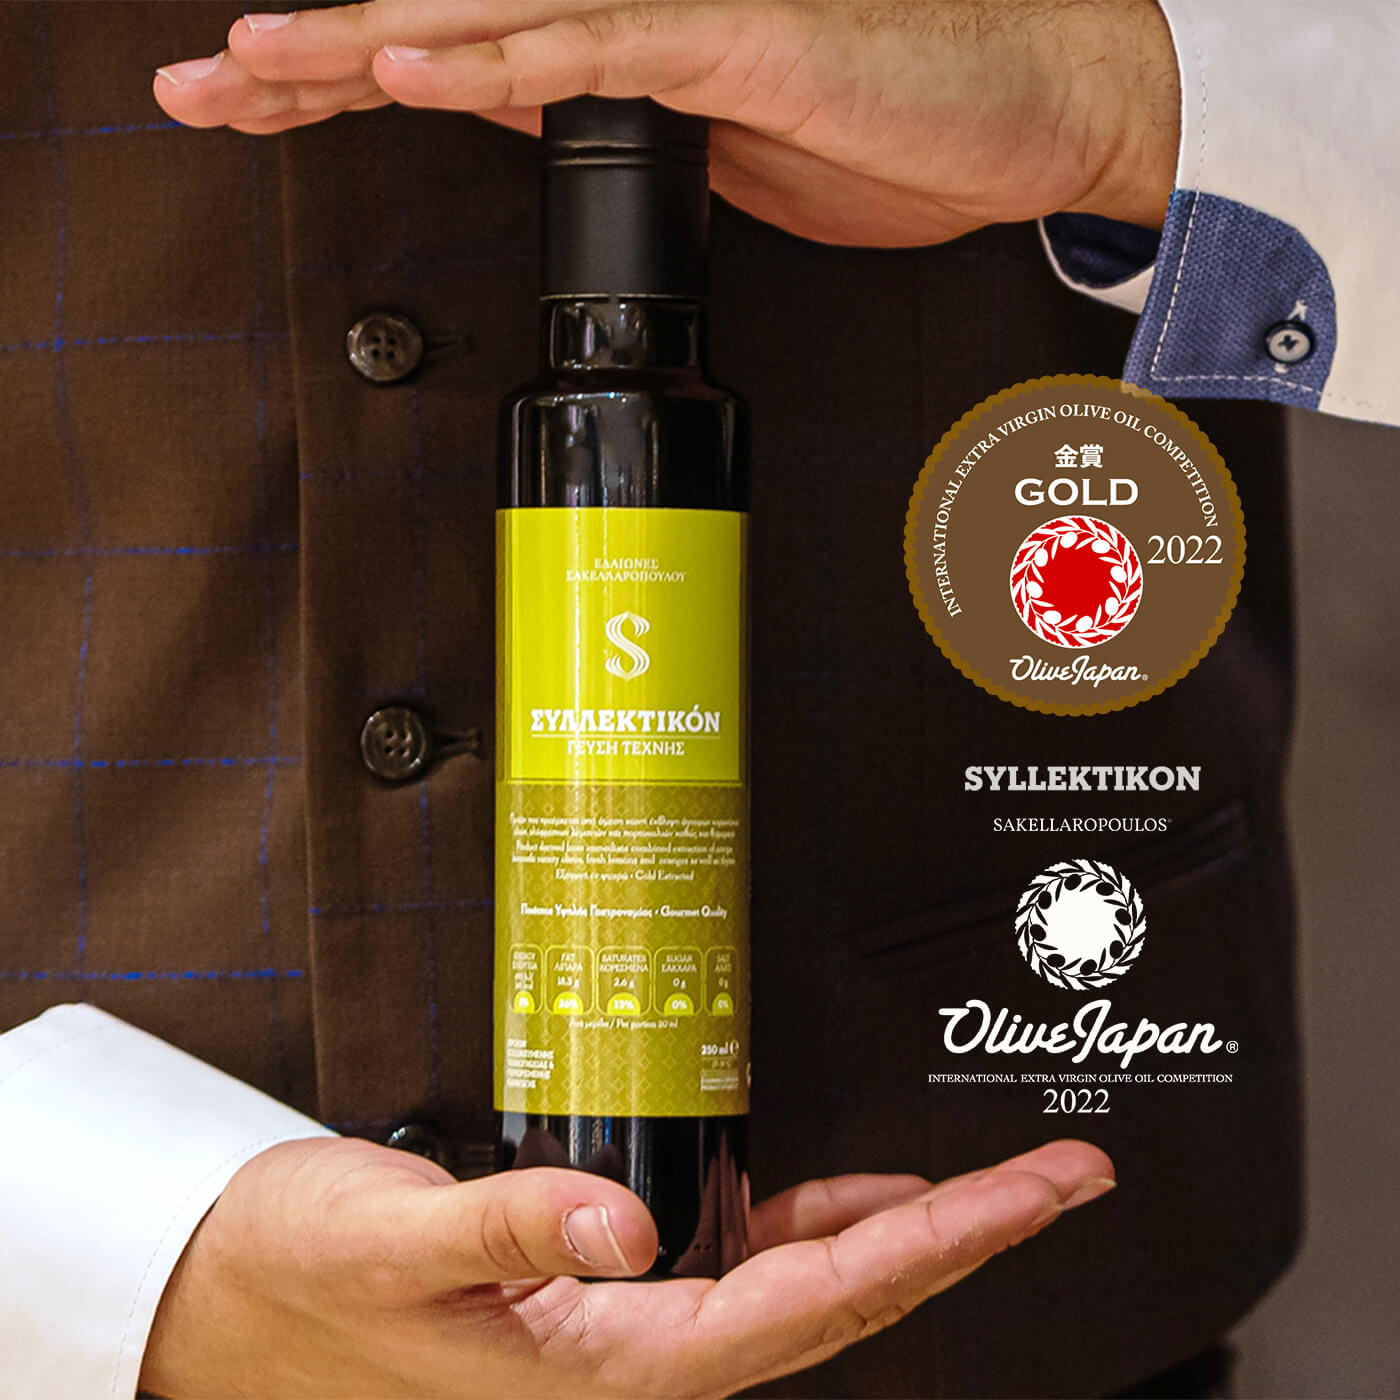 Olive Japan 2022 Flavored Syllektikon Flavored Gold awarded αρωματικό ελαιόλαδο Συλλεκτικόν